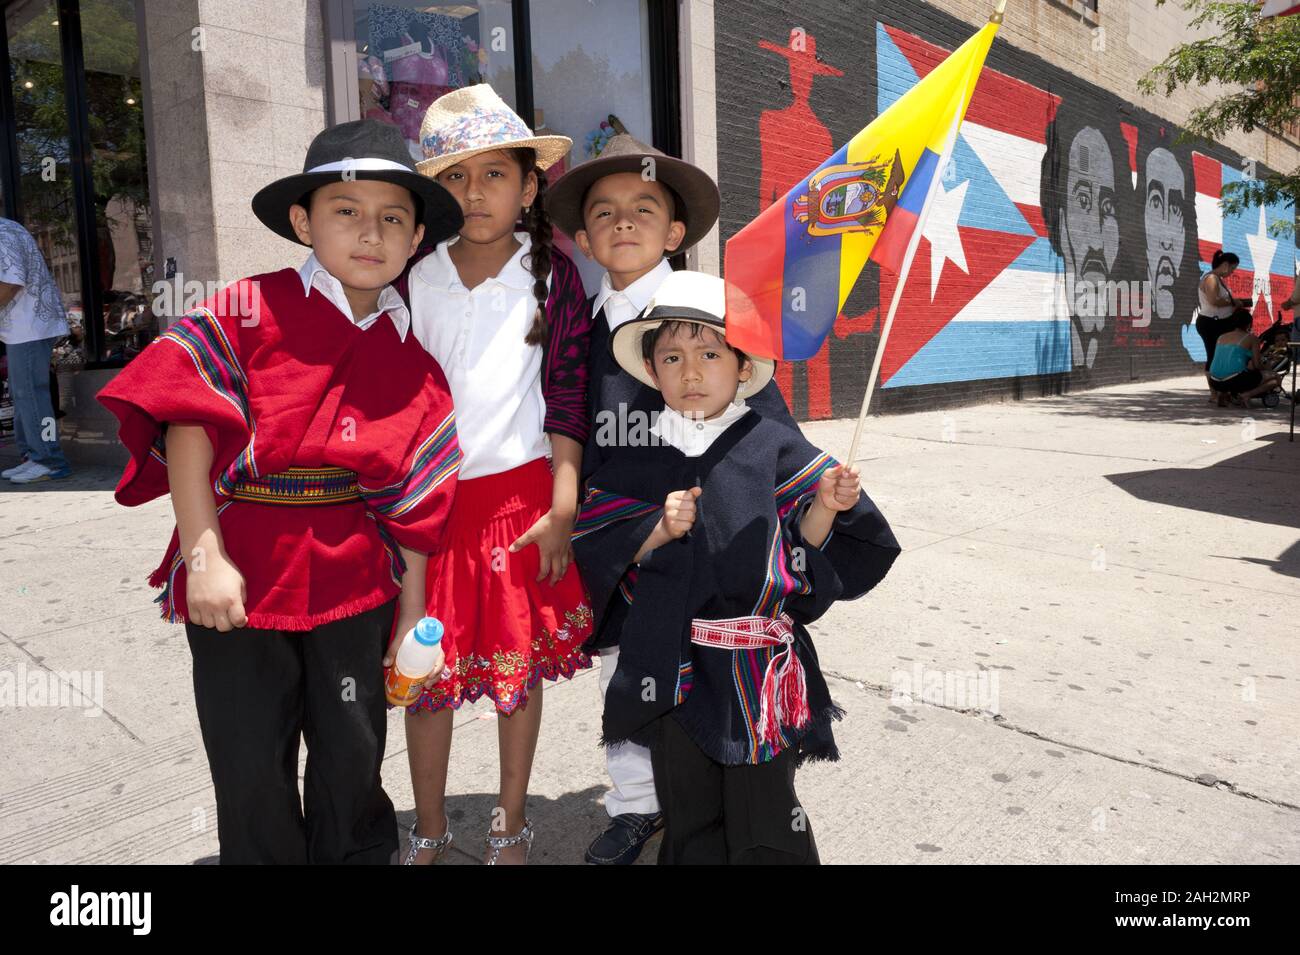 Ecuadorian-American children participate in The Children's Evangelical Parade in East Harlem in NYC. Stock Photo